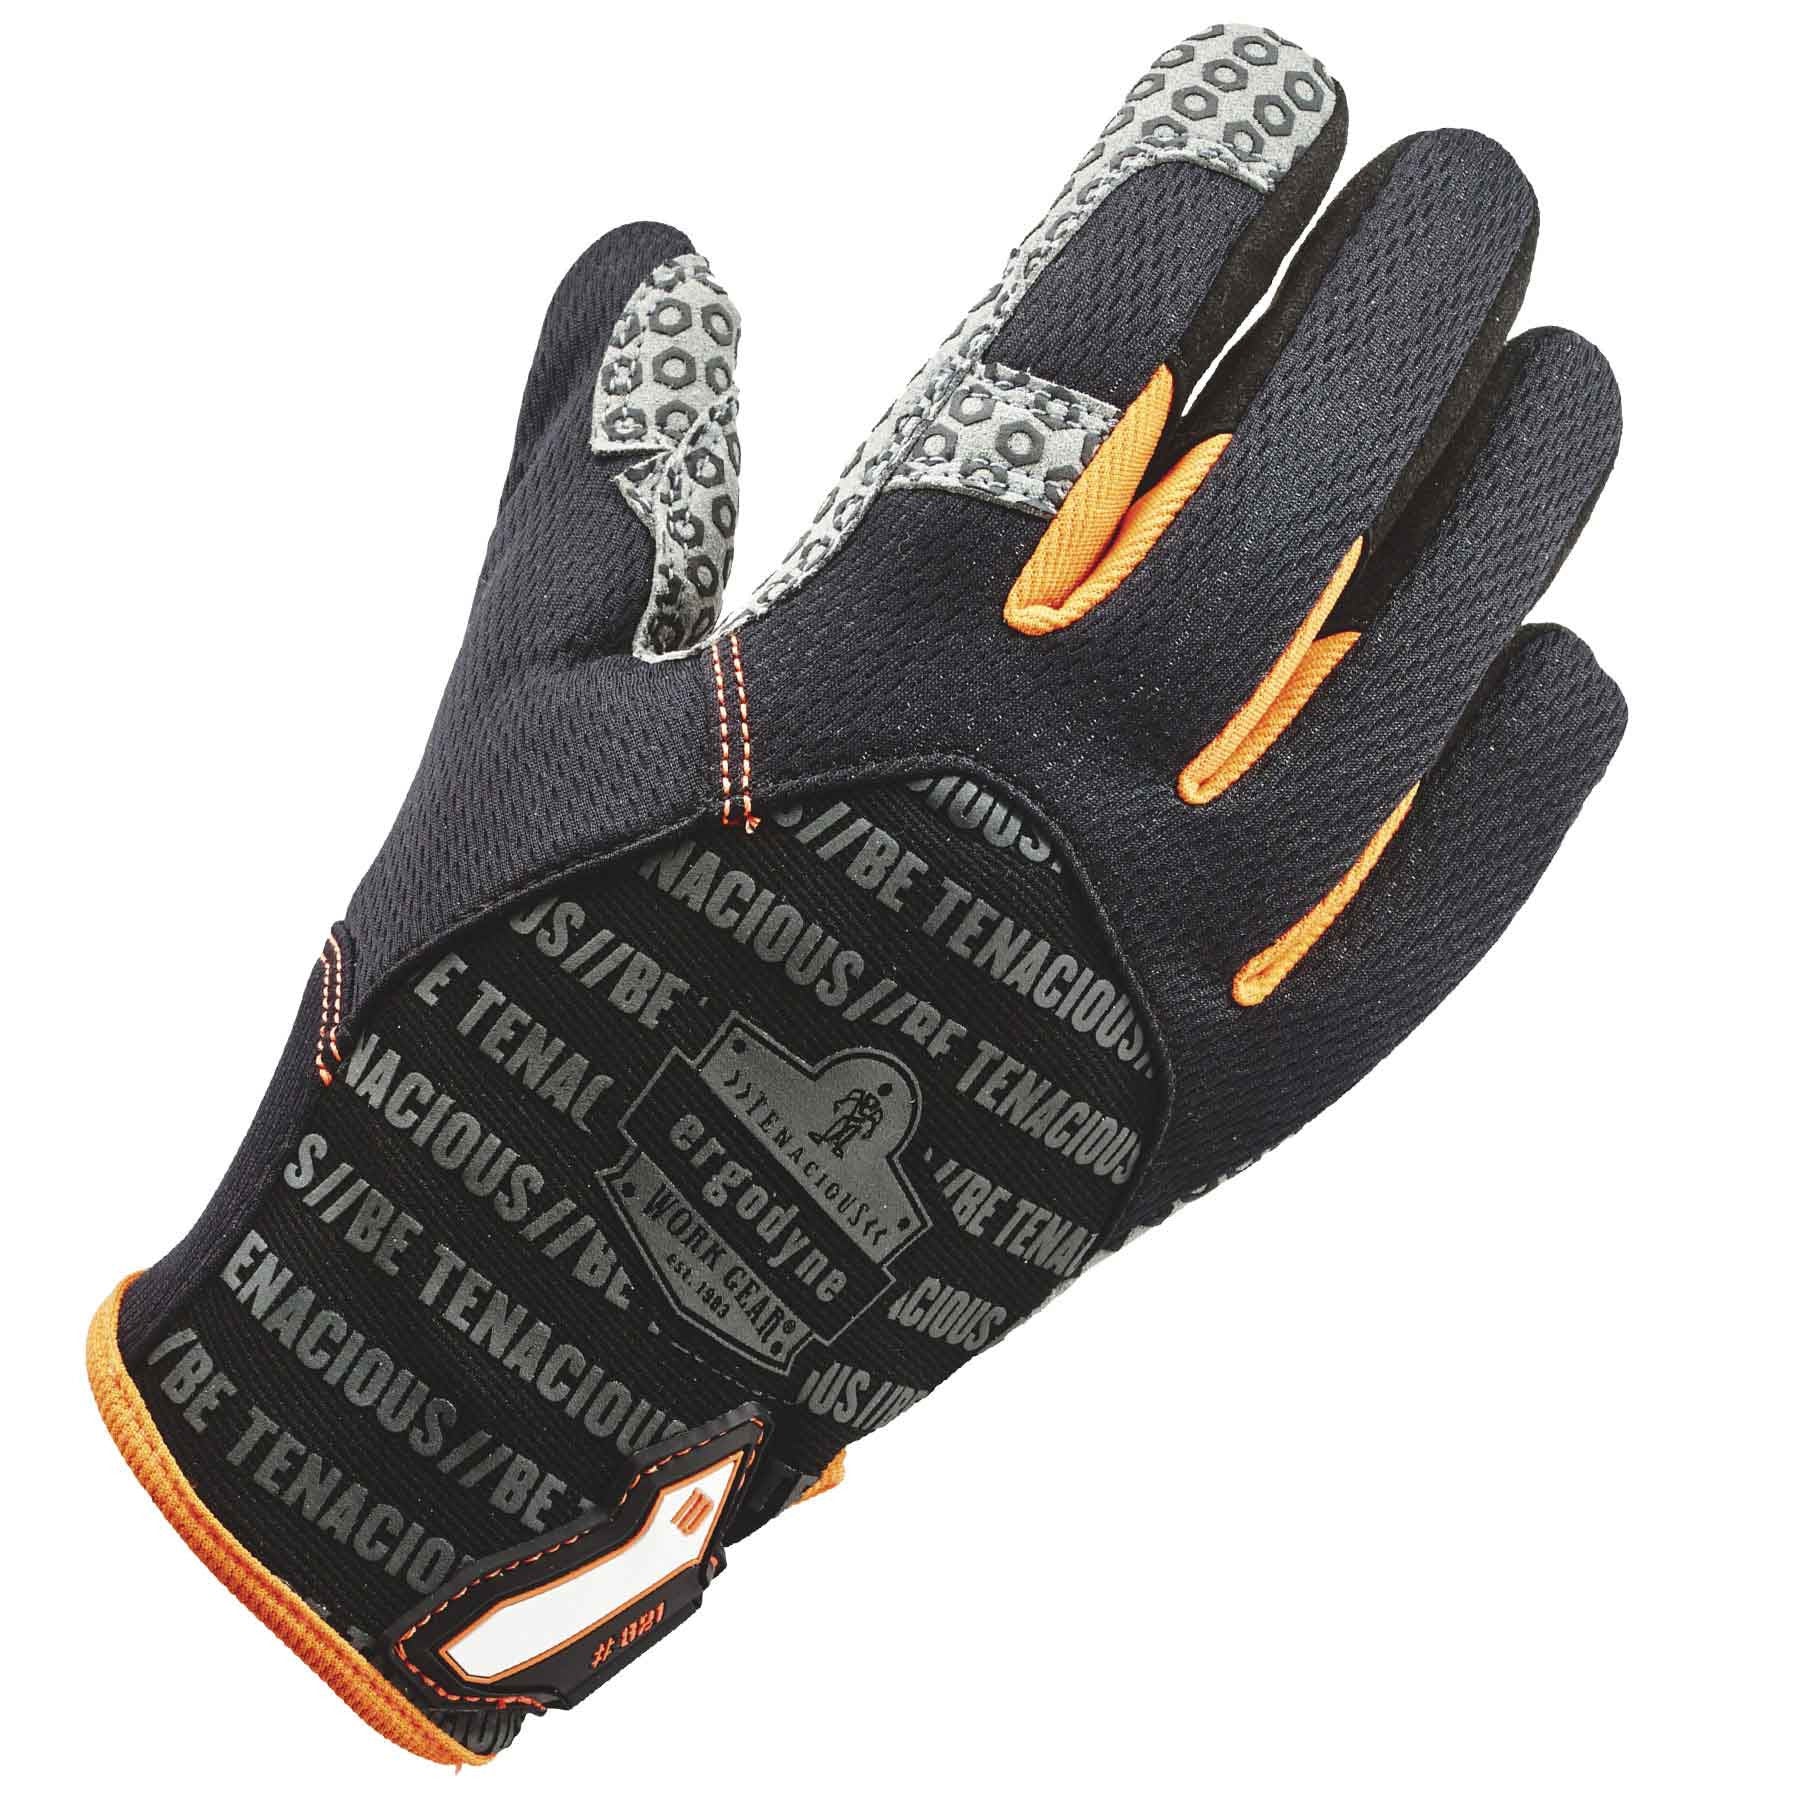 ProFlex 821 Smooth Surface Handling Gloves-eSafety Supplies, Inc